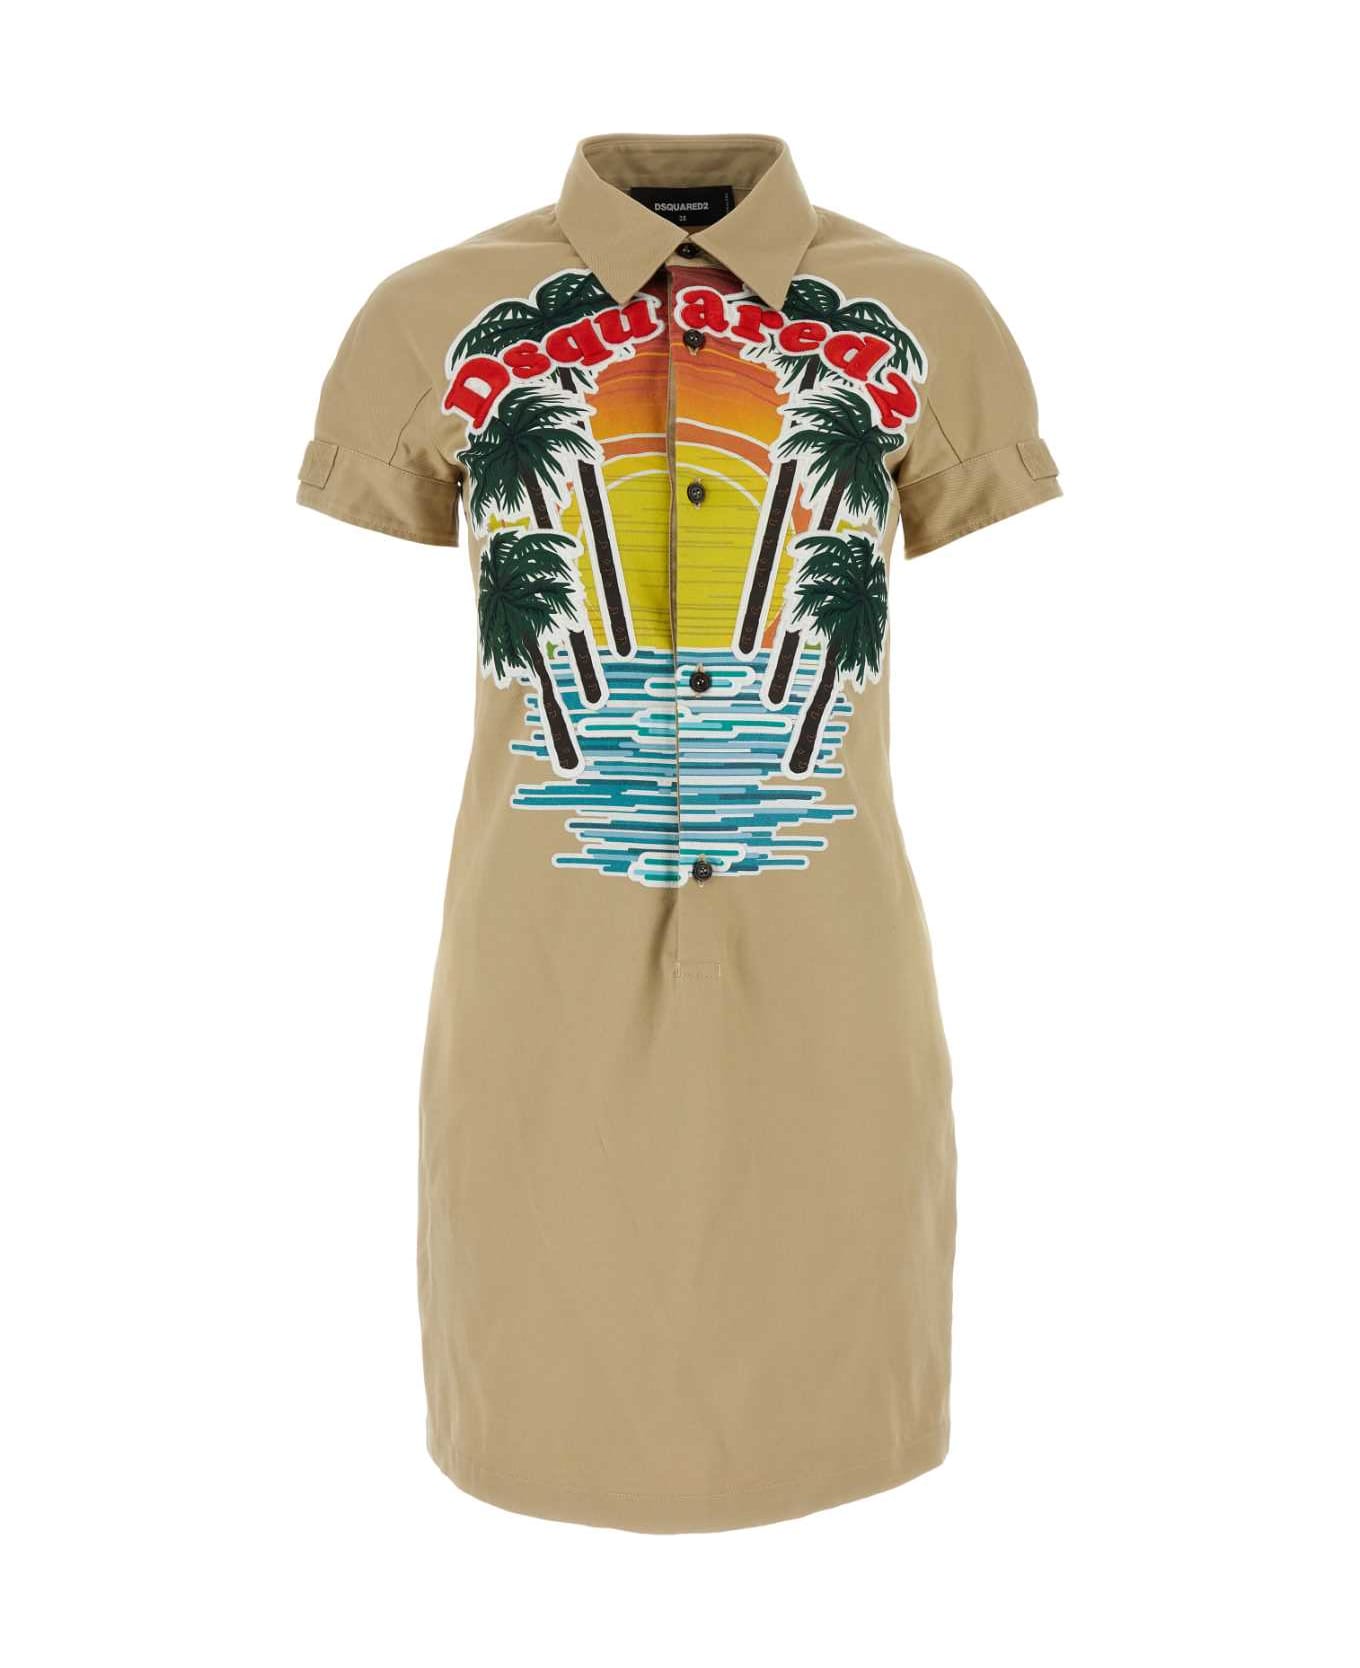 Dsquared2 Beige Stretch Cotton Sunset Shirt Dress - STONE